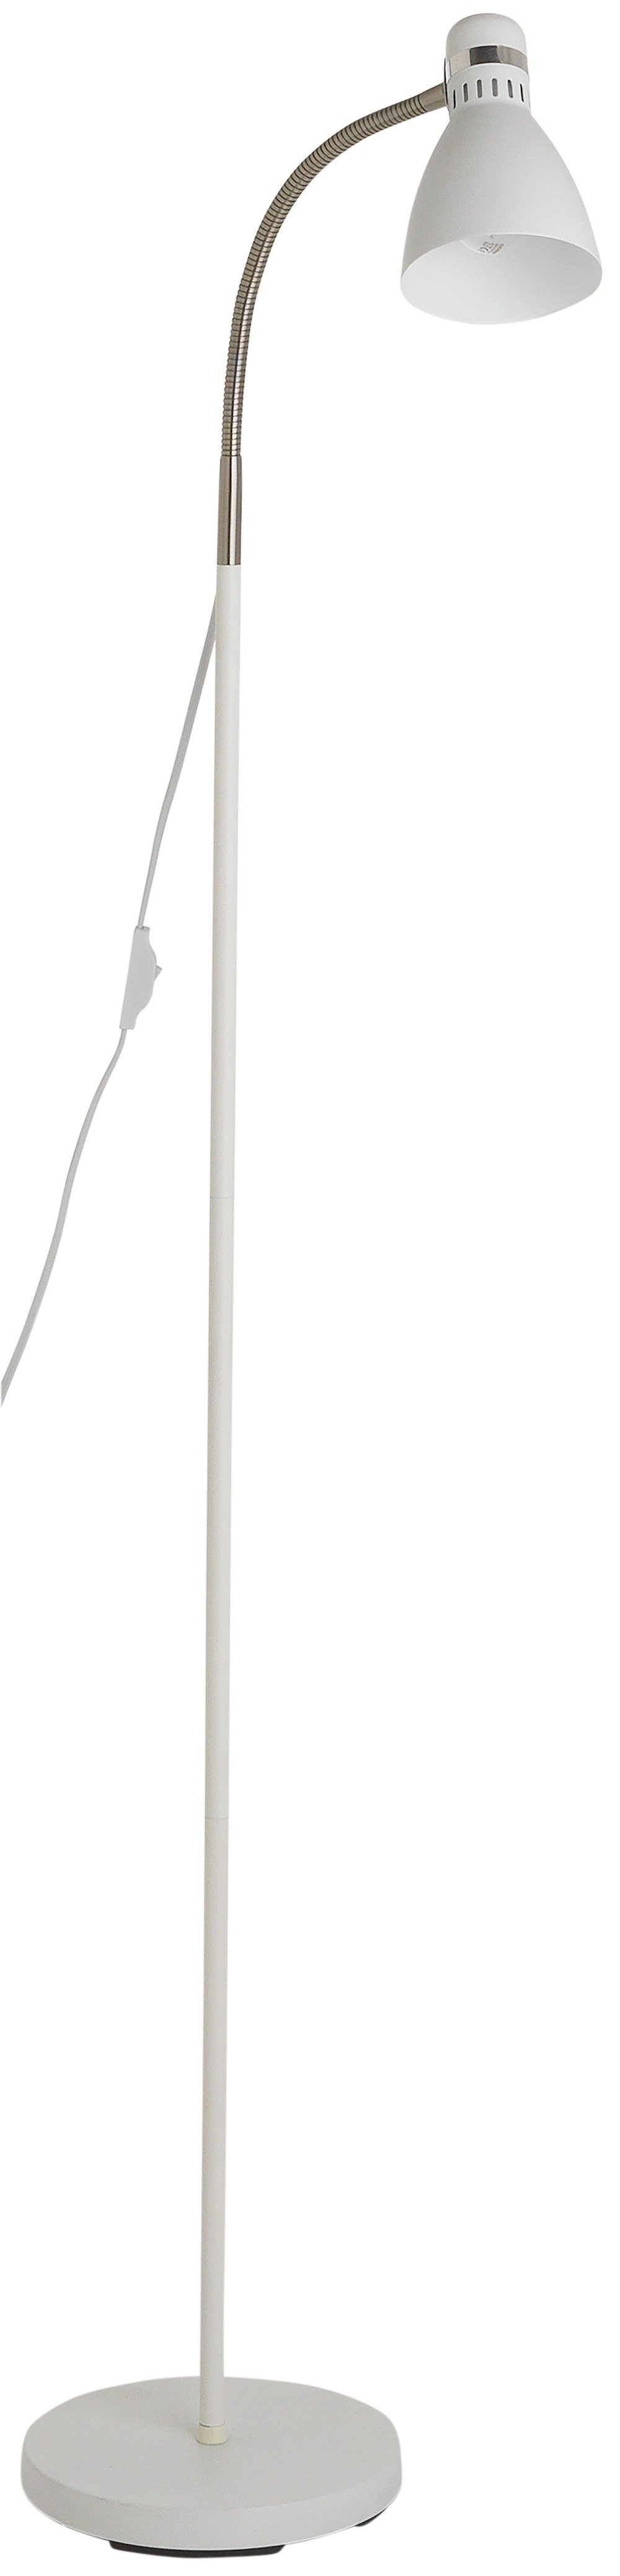 ColourMatch Dent Floor Lamp - Super White